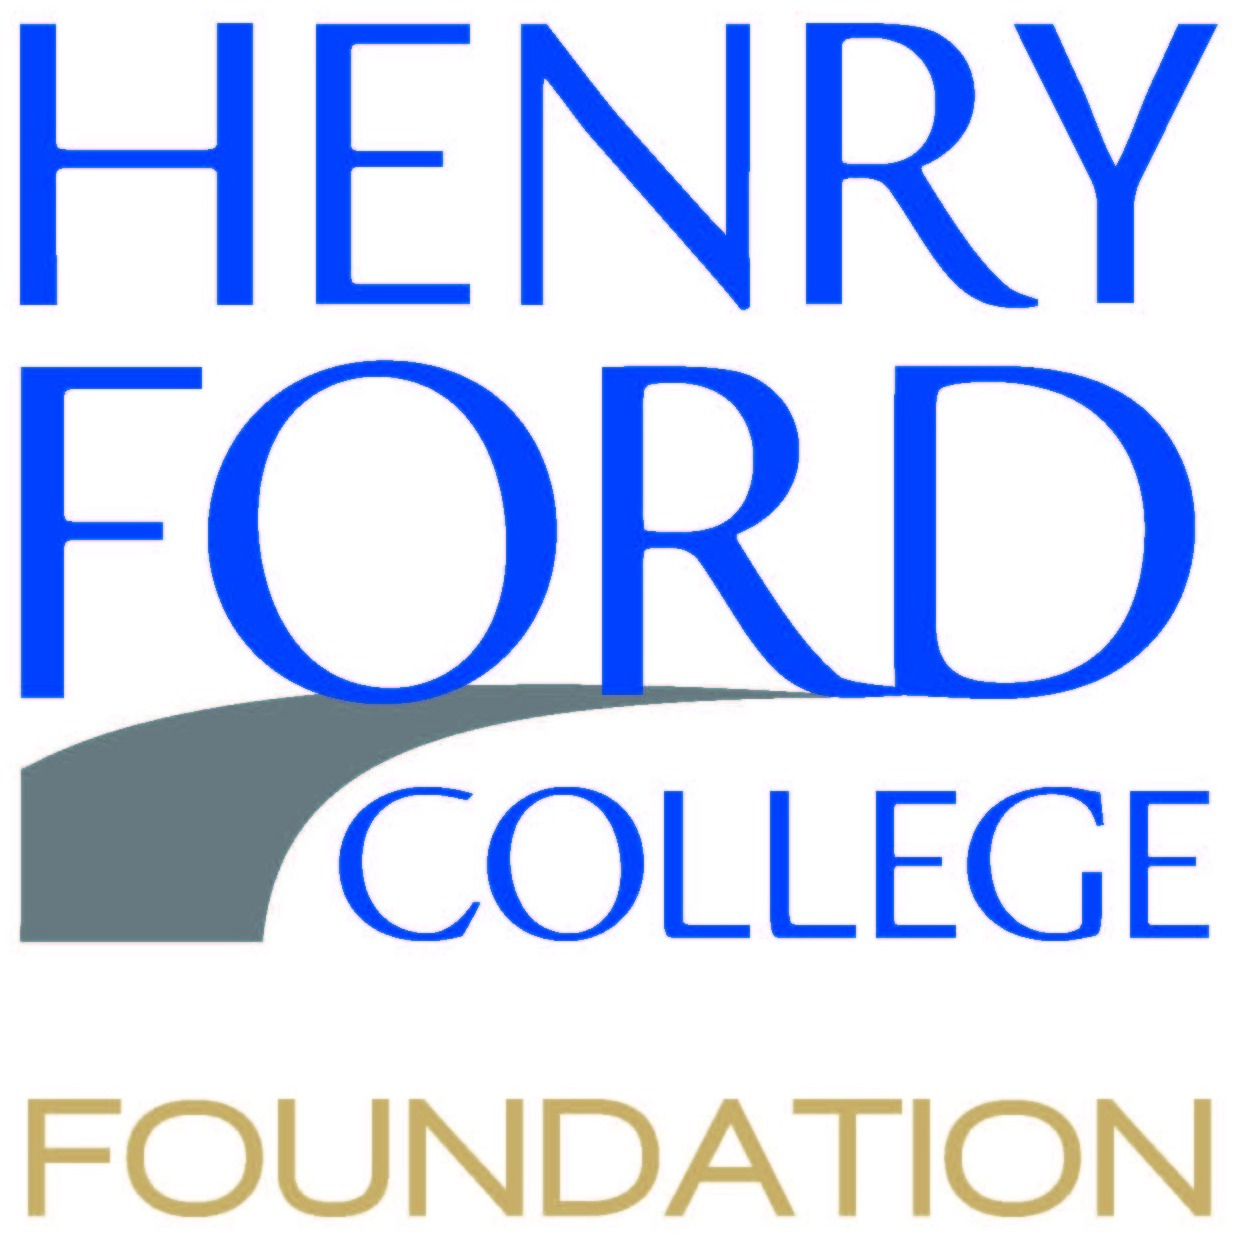 HFC_Foundation_logo.jpg